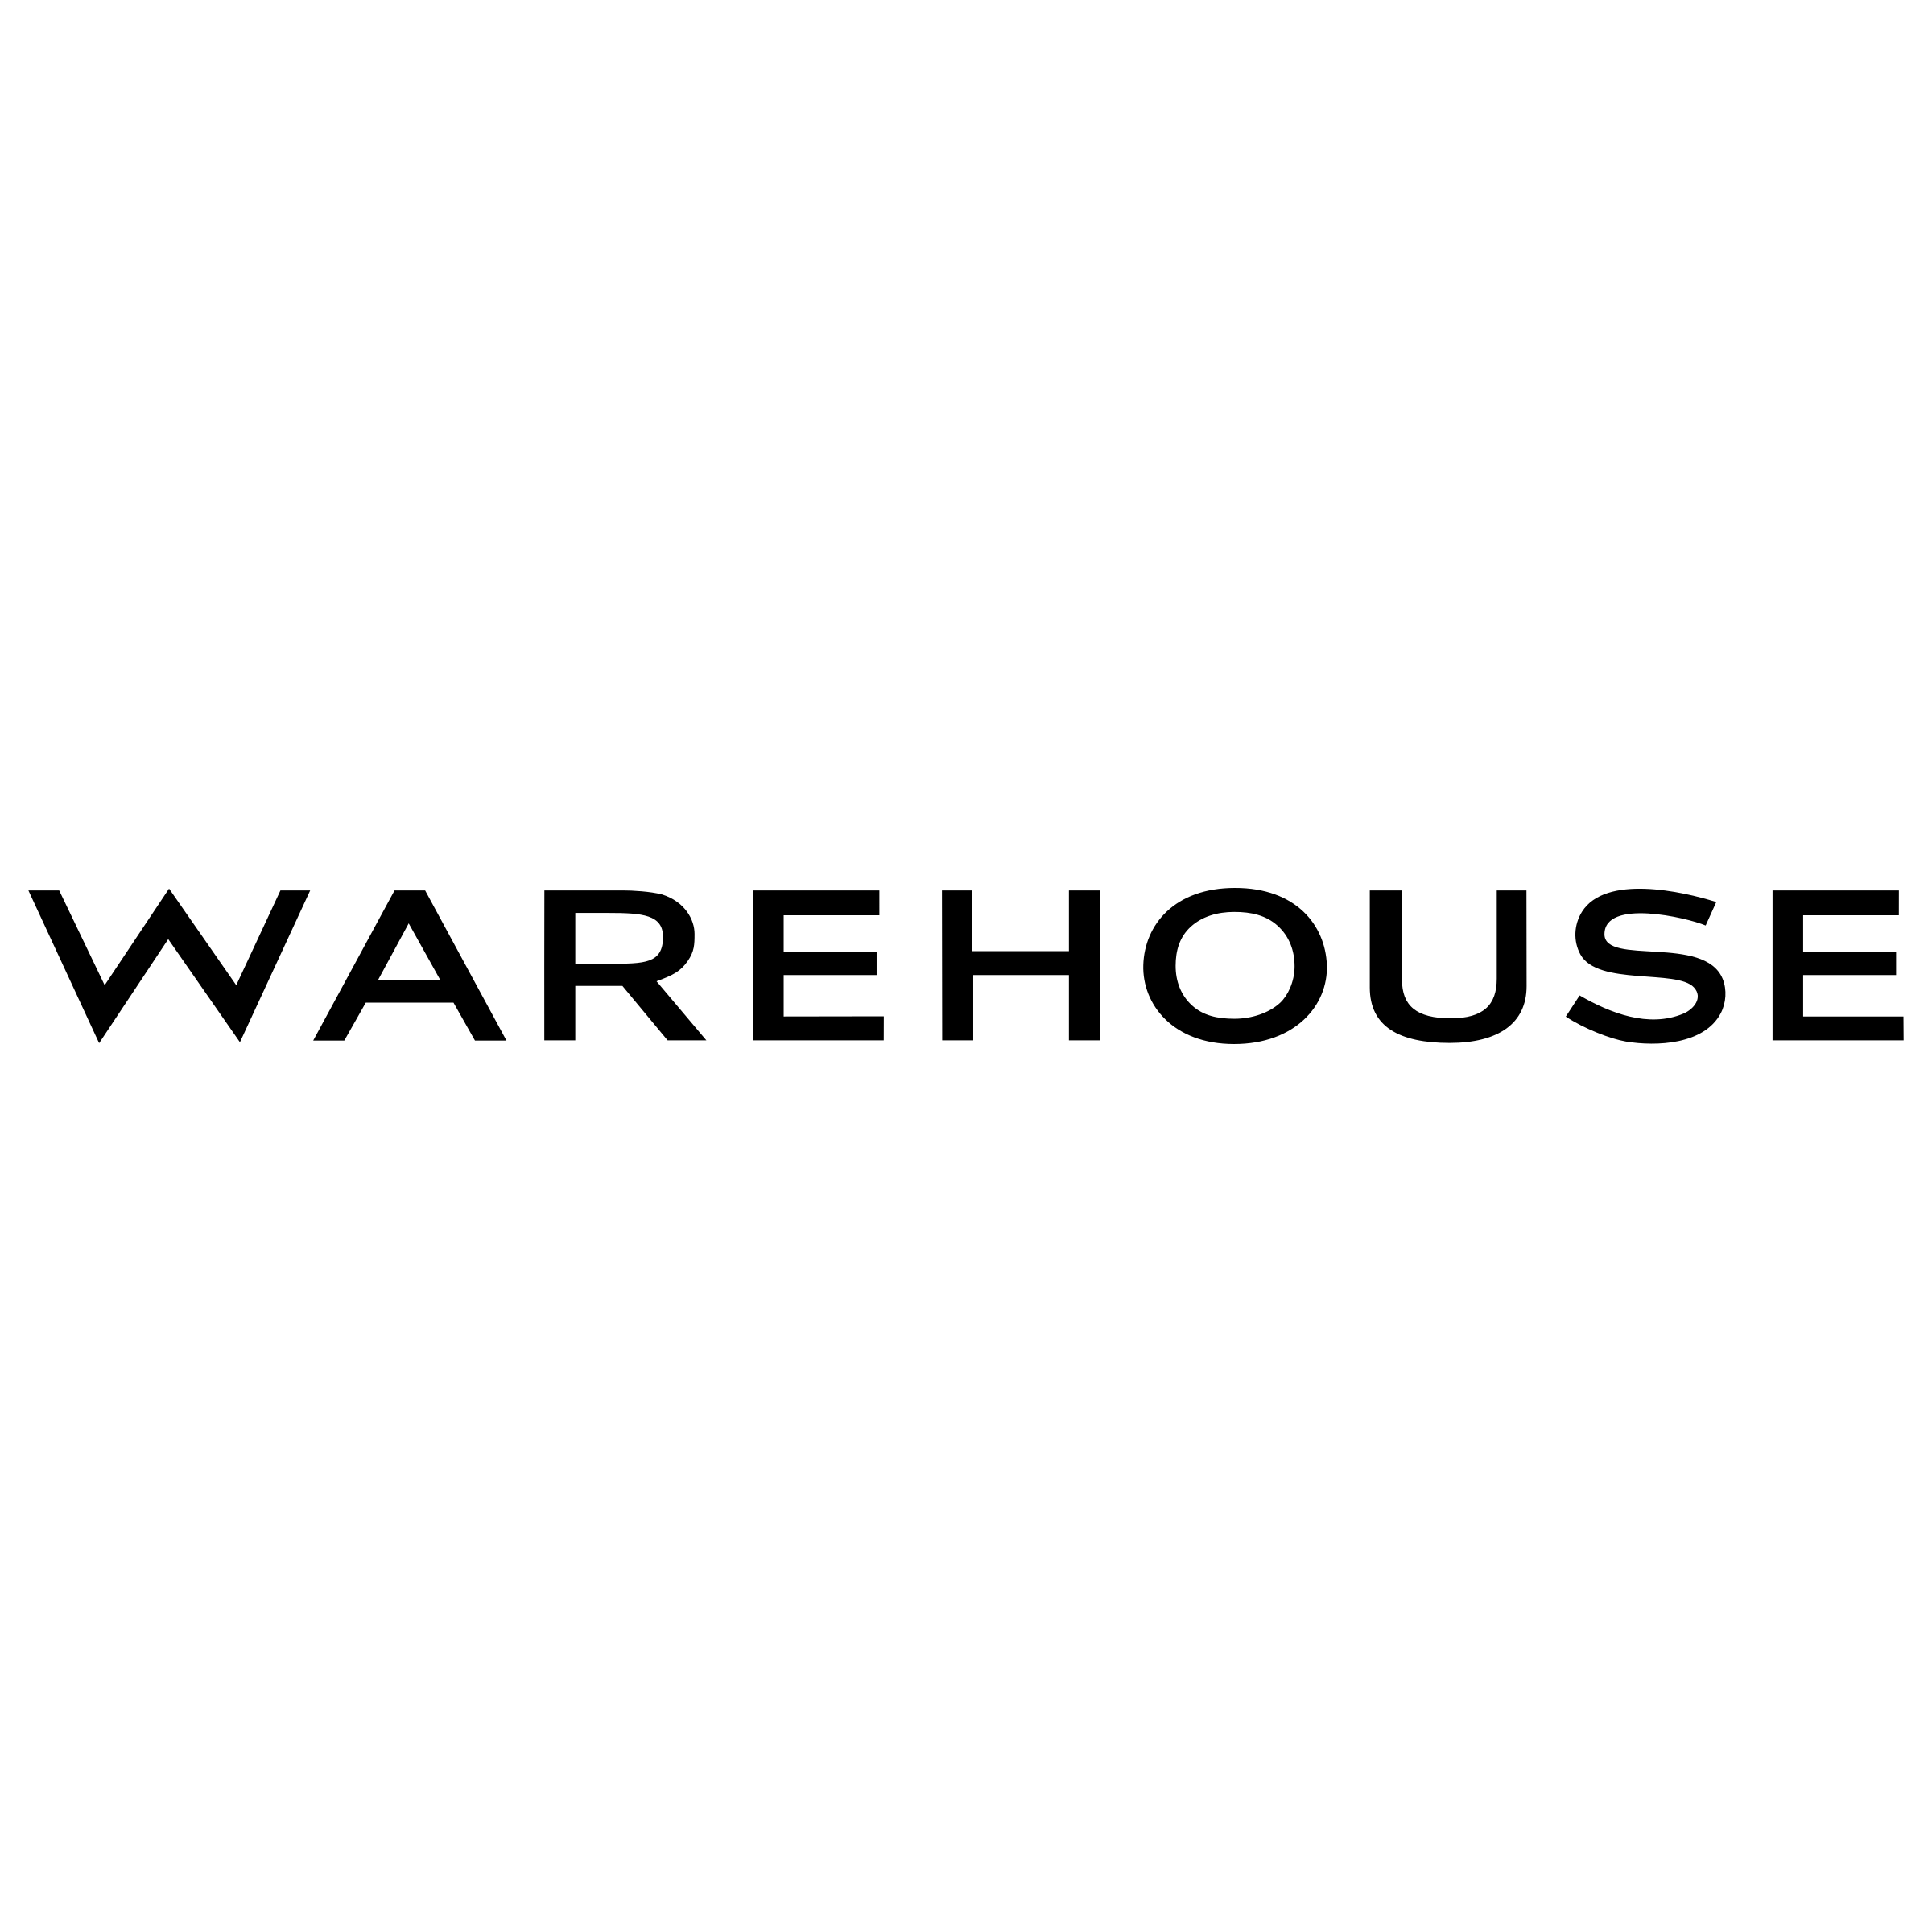 Warehouse Logo - Warehouse Logo PNG Transparent & SVG Vector - Freebie Supply